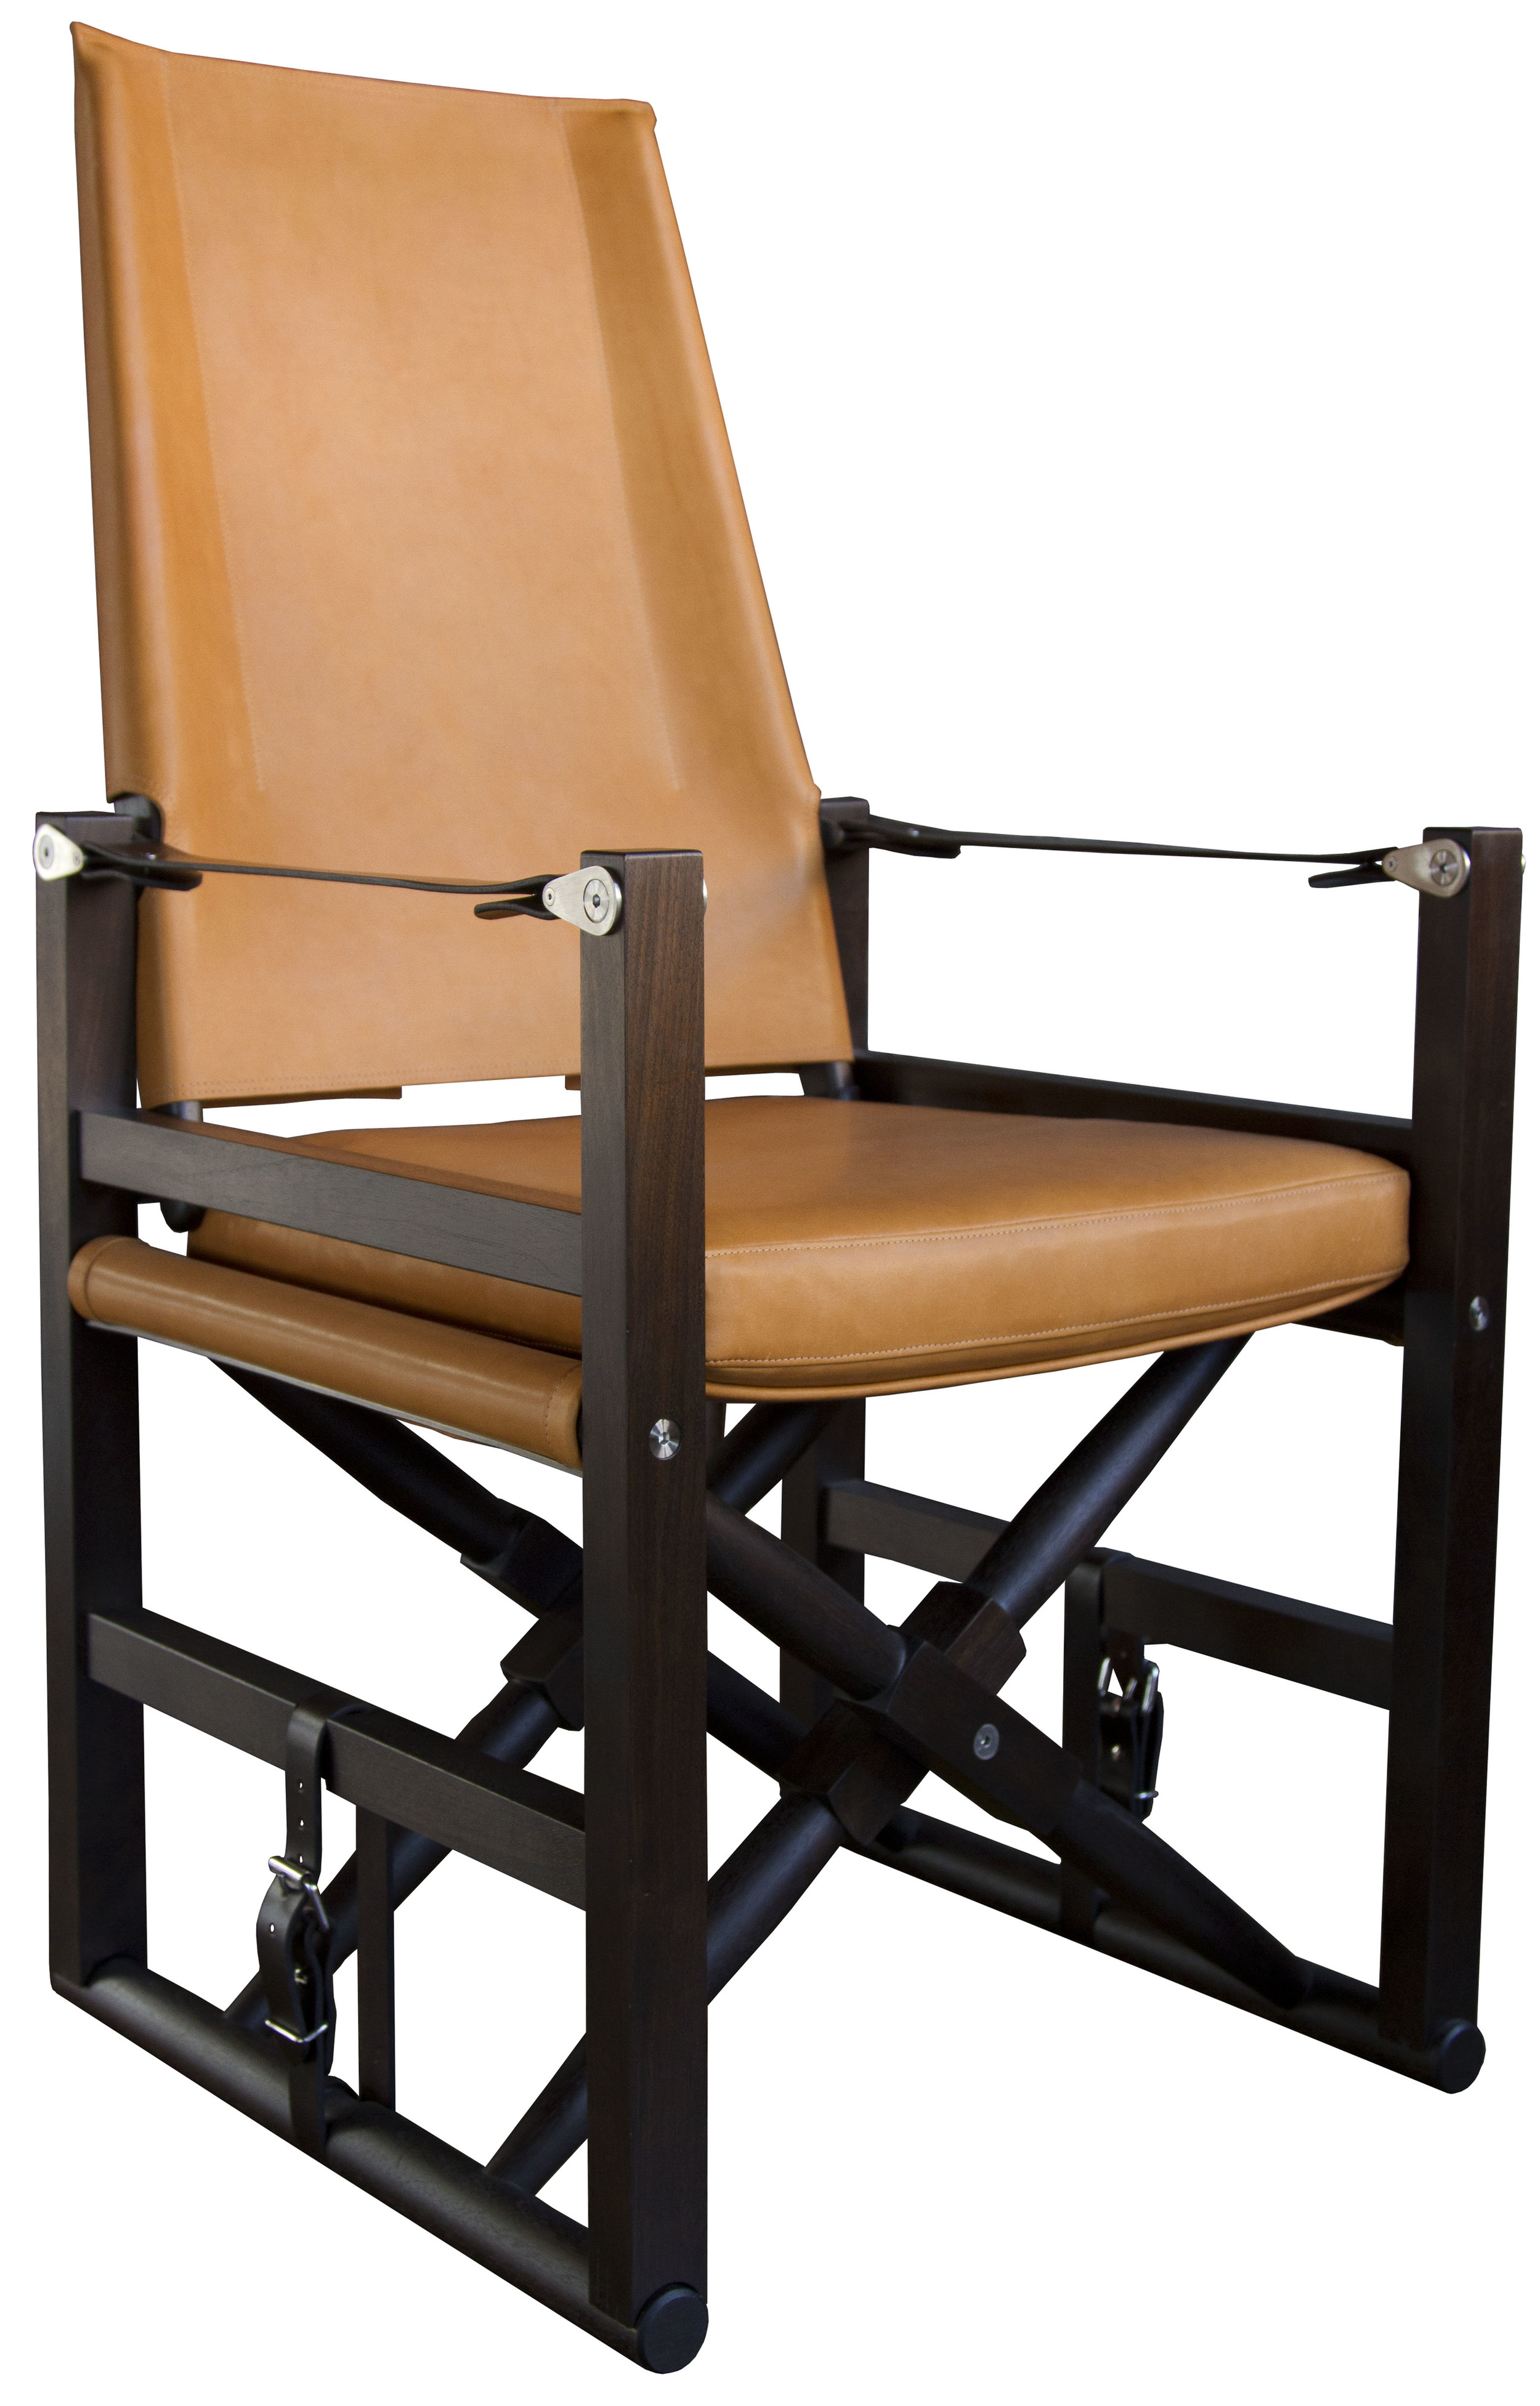  Cabourn Sail Chair - folding